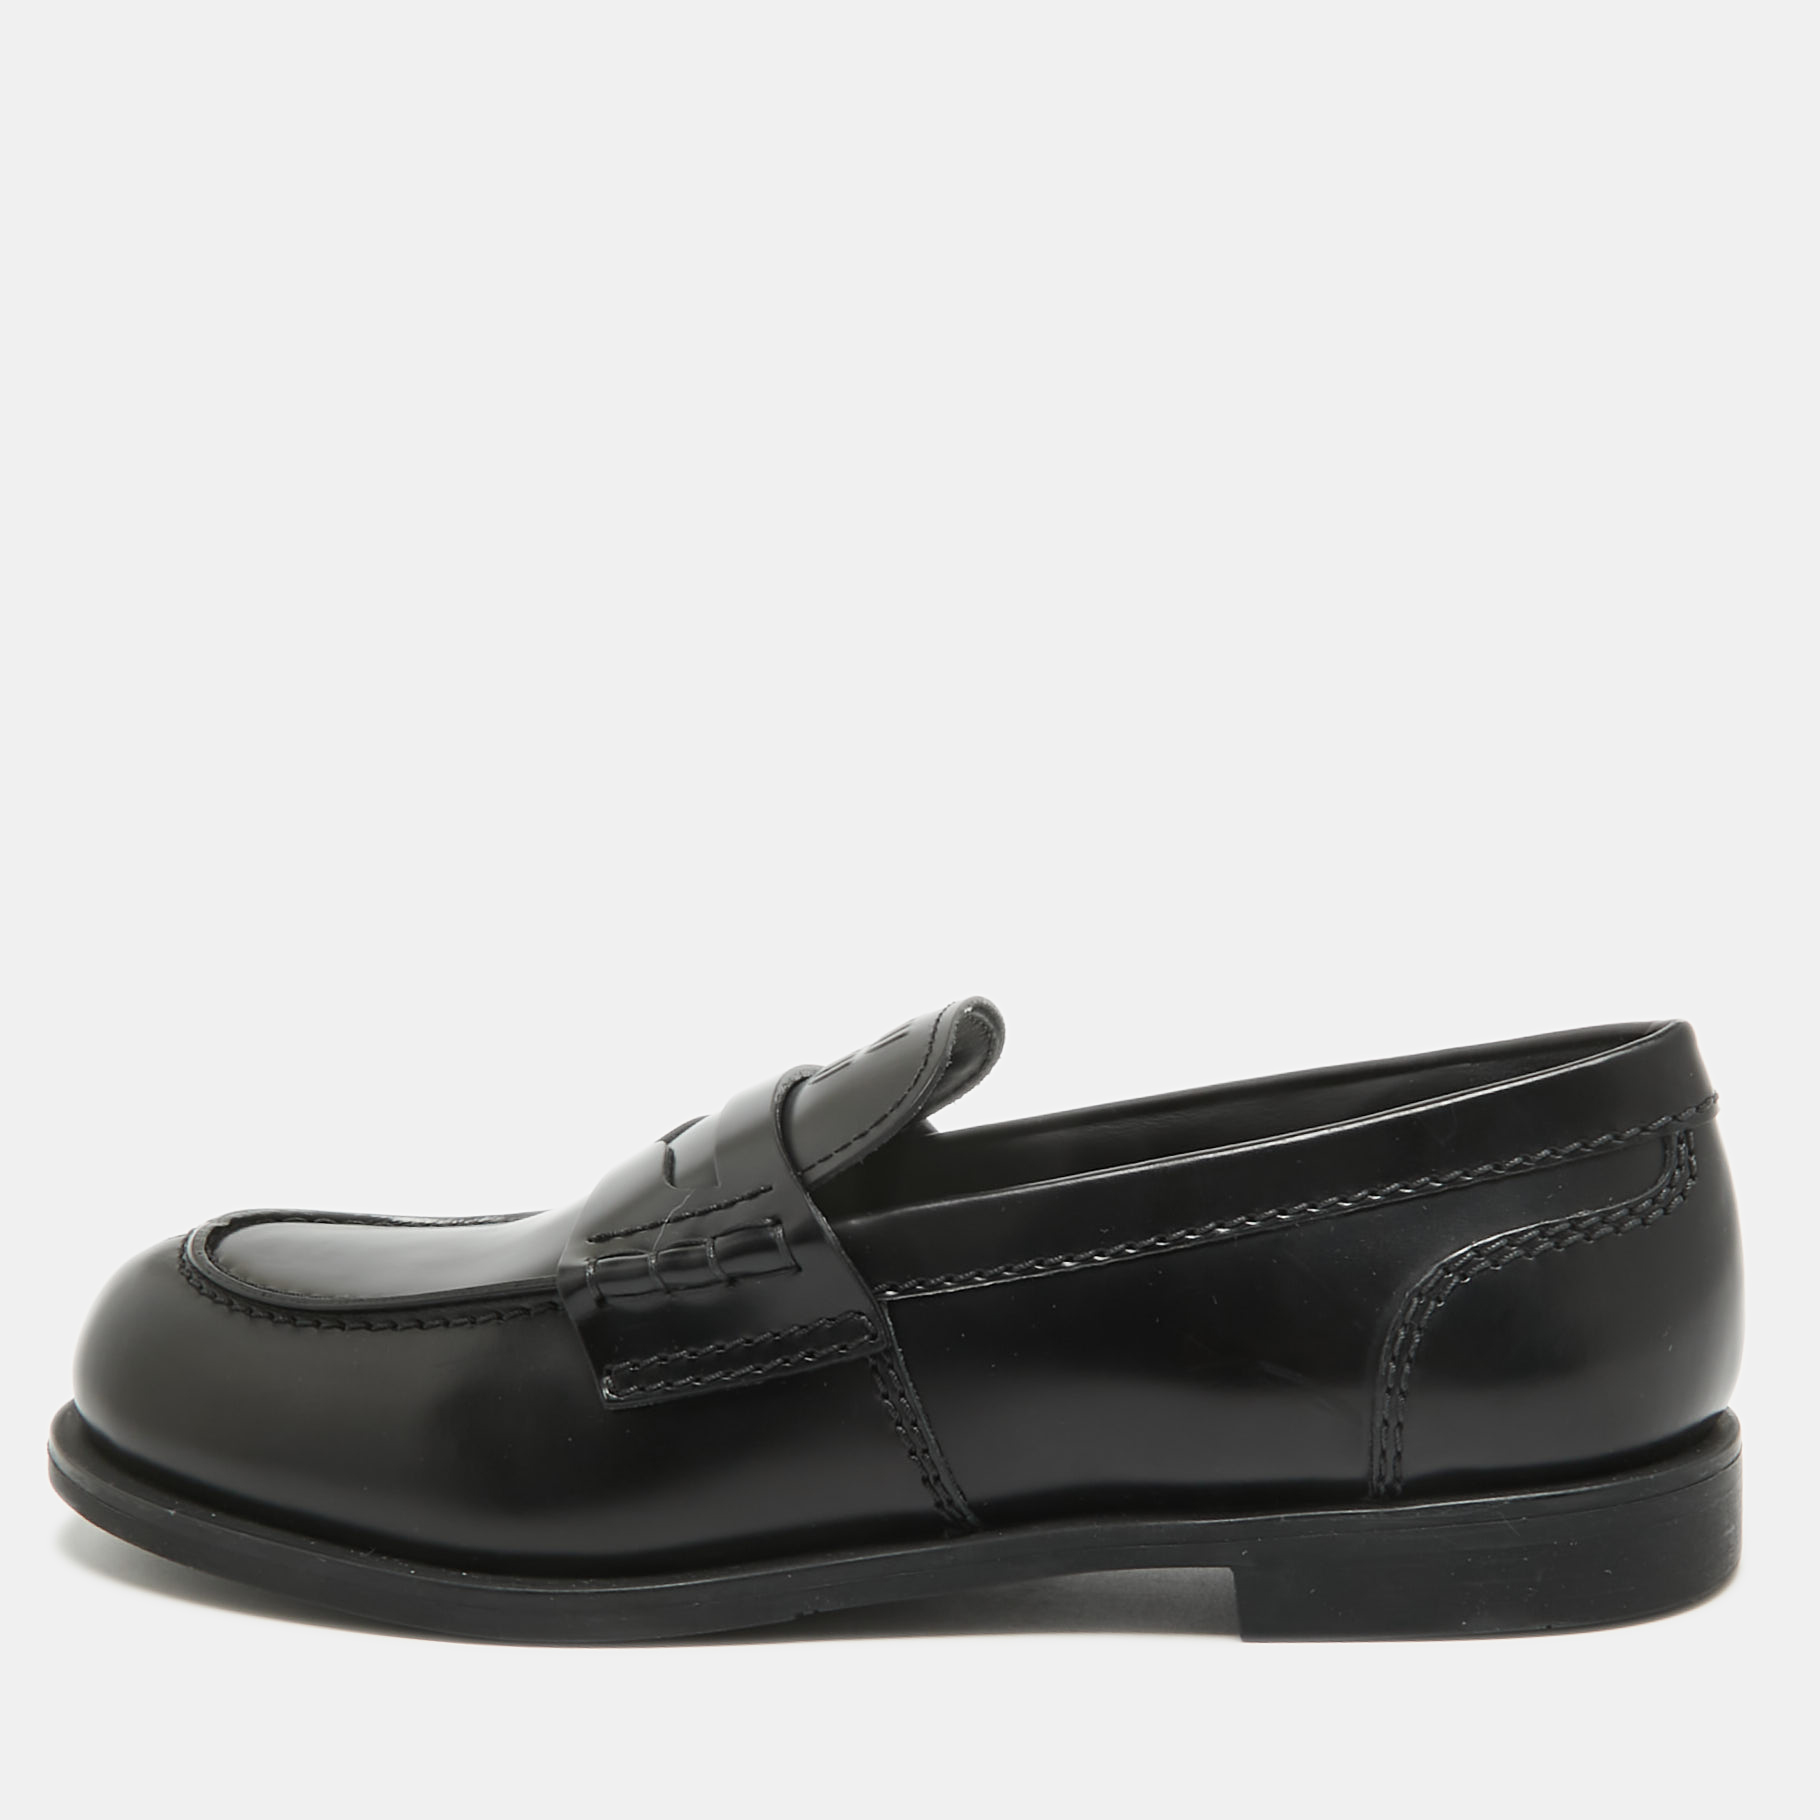 Miu Miu Black Leather Slip On Loafers Size 39